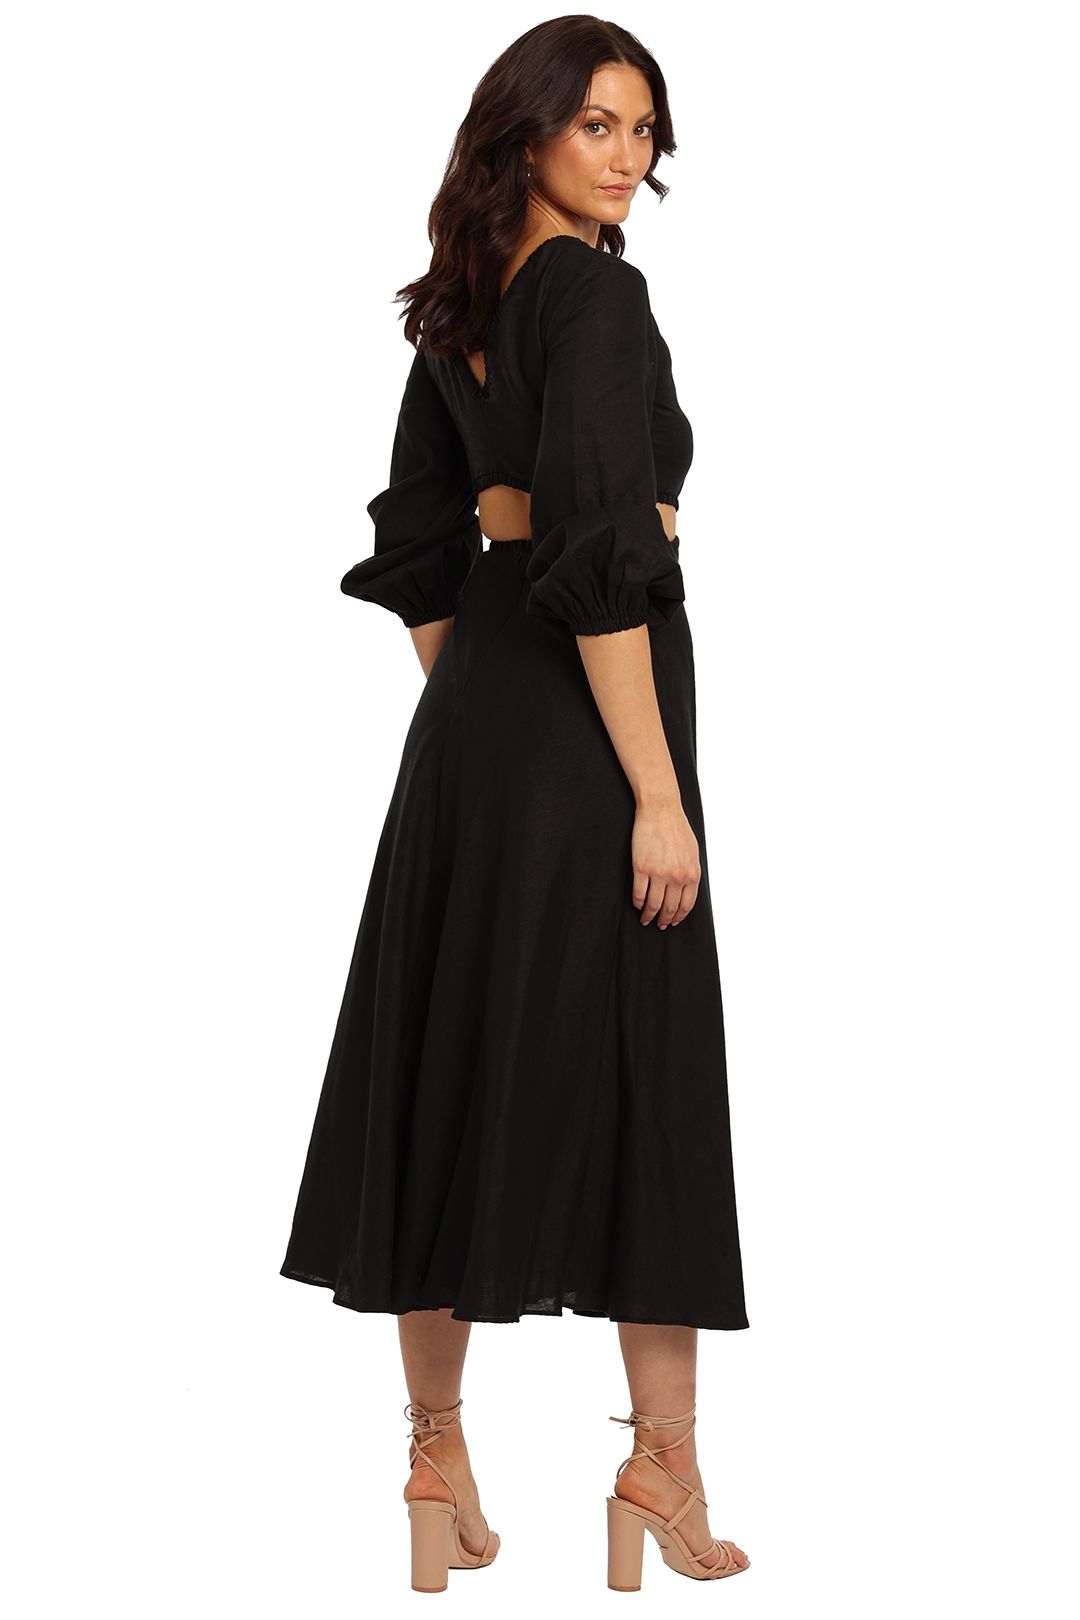 Bec and Bridge Madeleine Midi Dress Black Long Sleeve